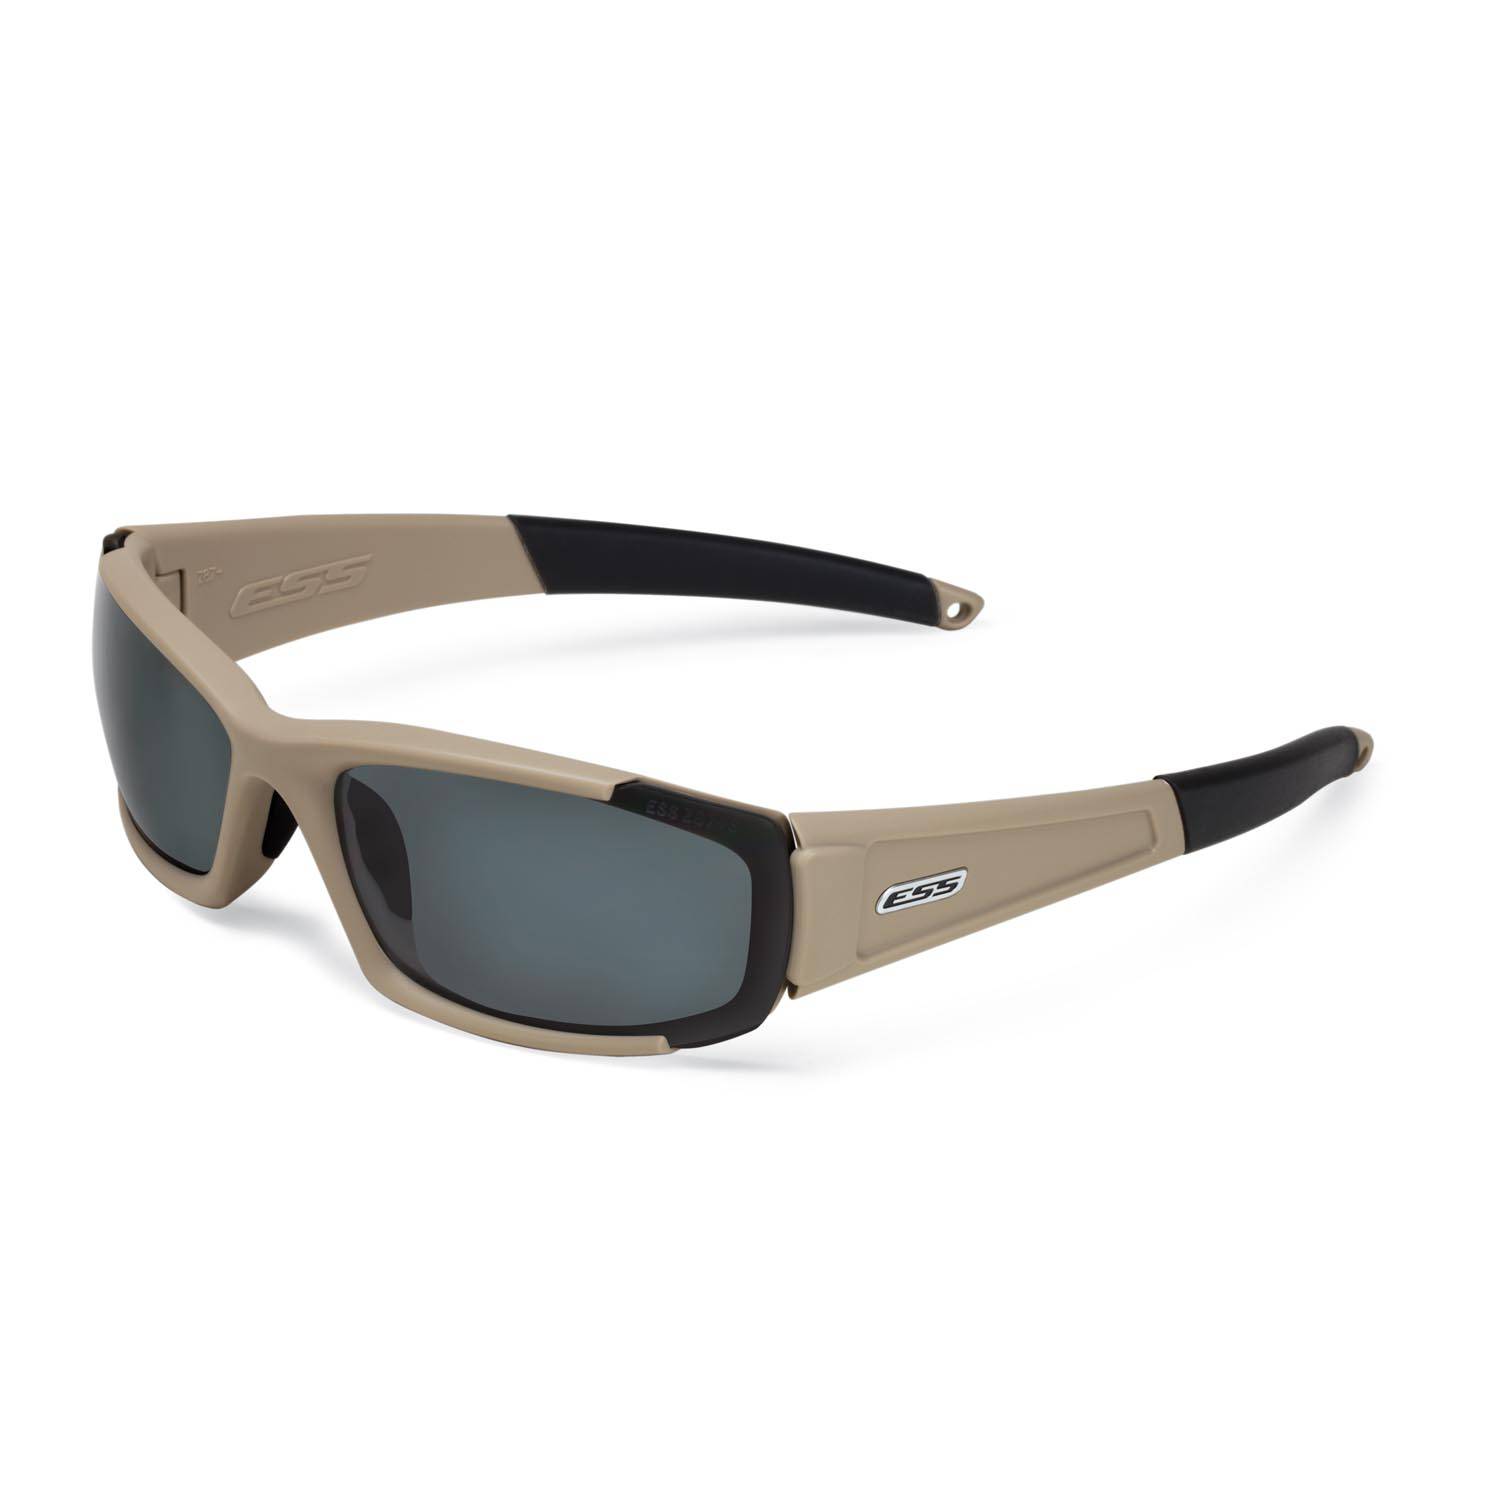 ESS CDI Terrain Tan Sunglasses with Interchangeable Lenses